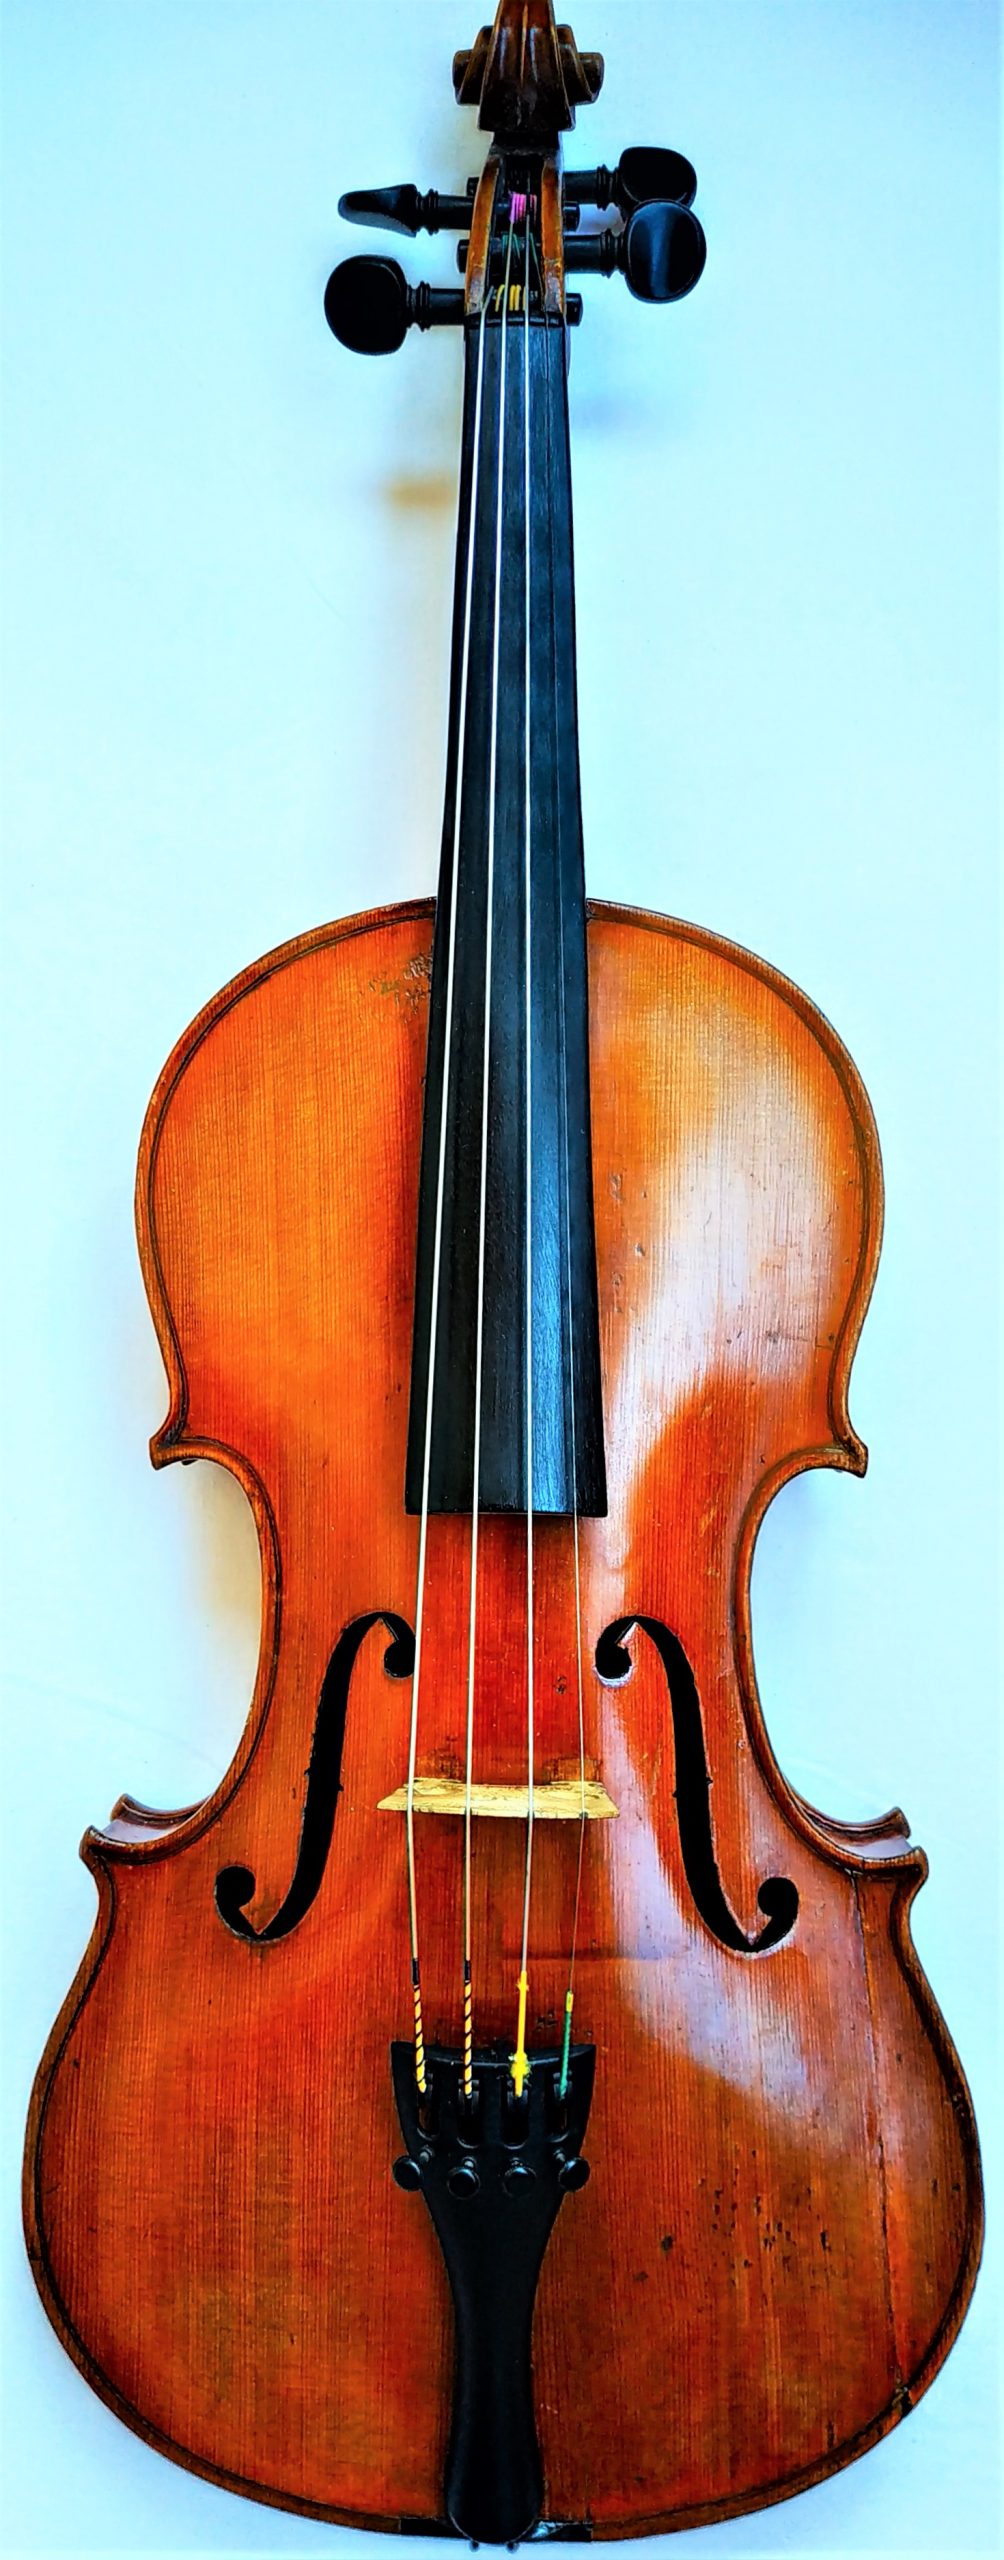 Французская скрипка 19го века